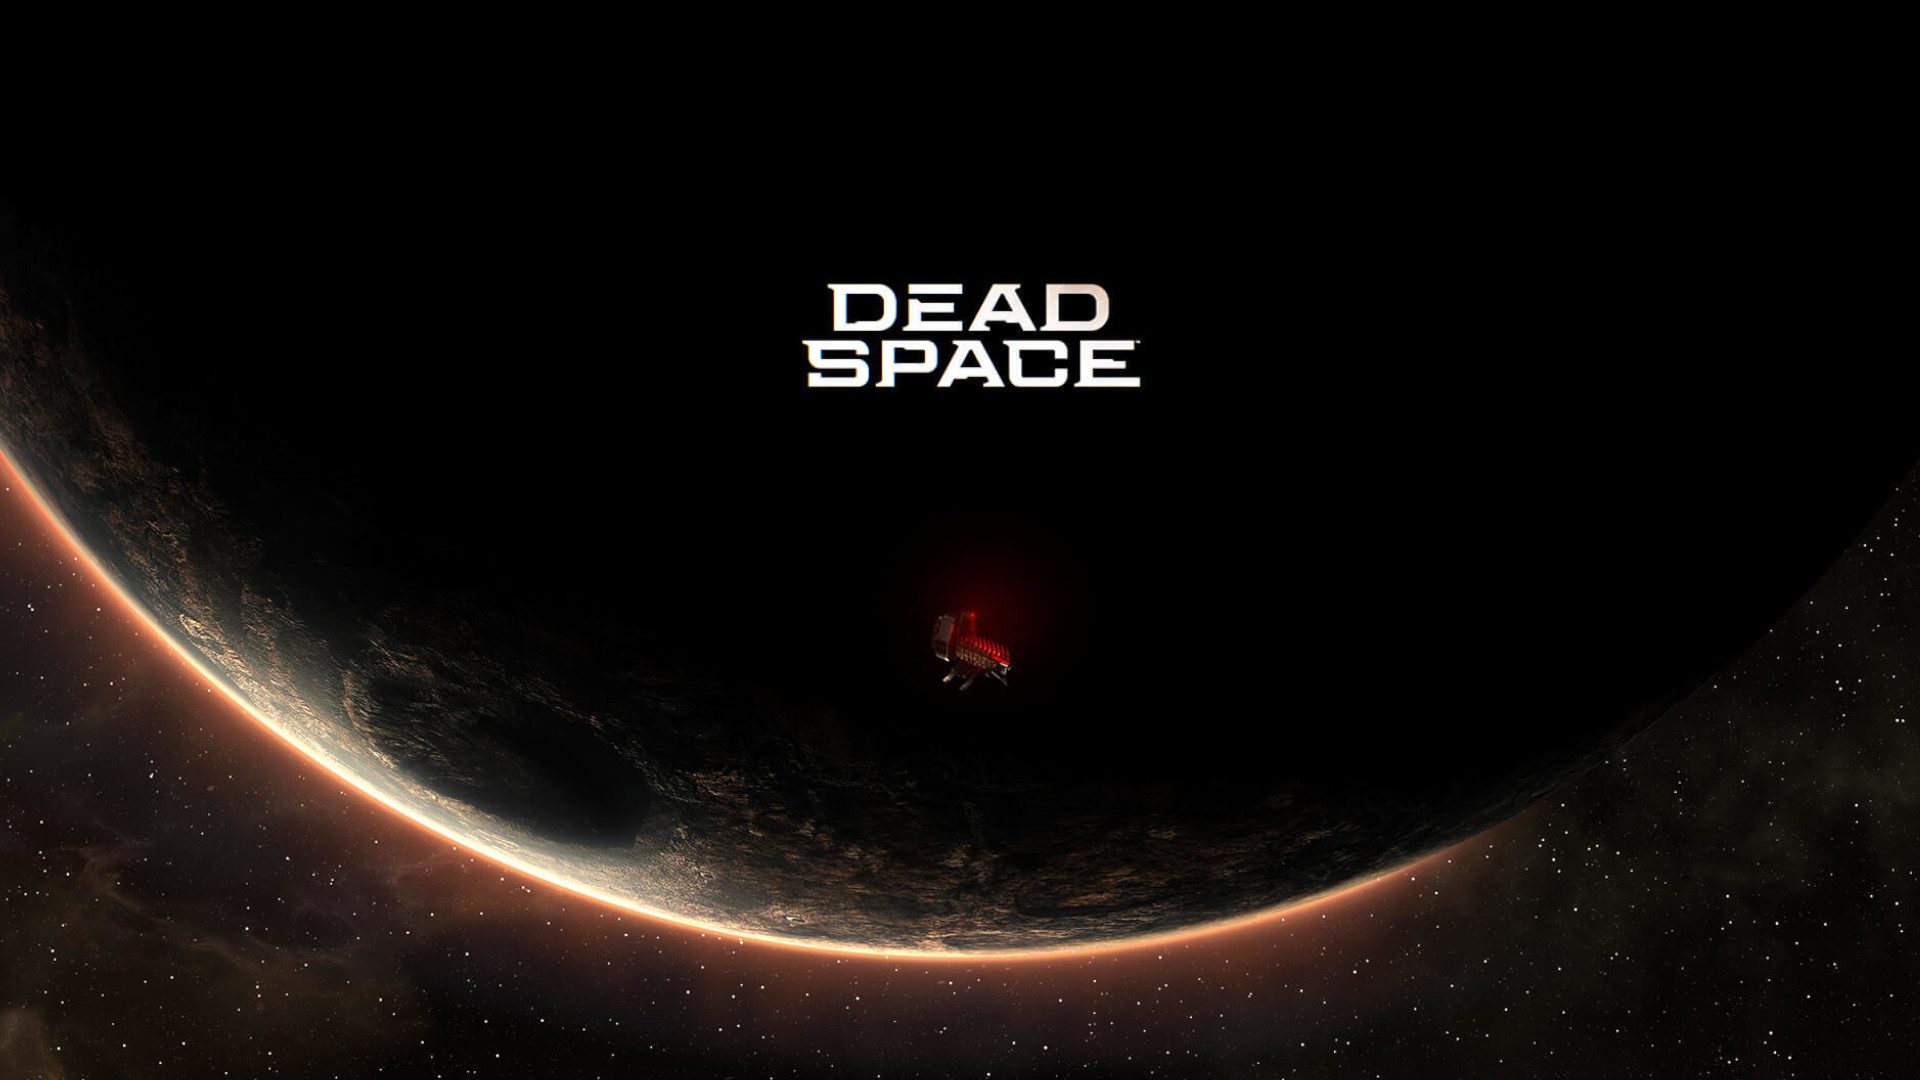 Dead-space-stream-1680837